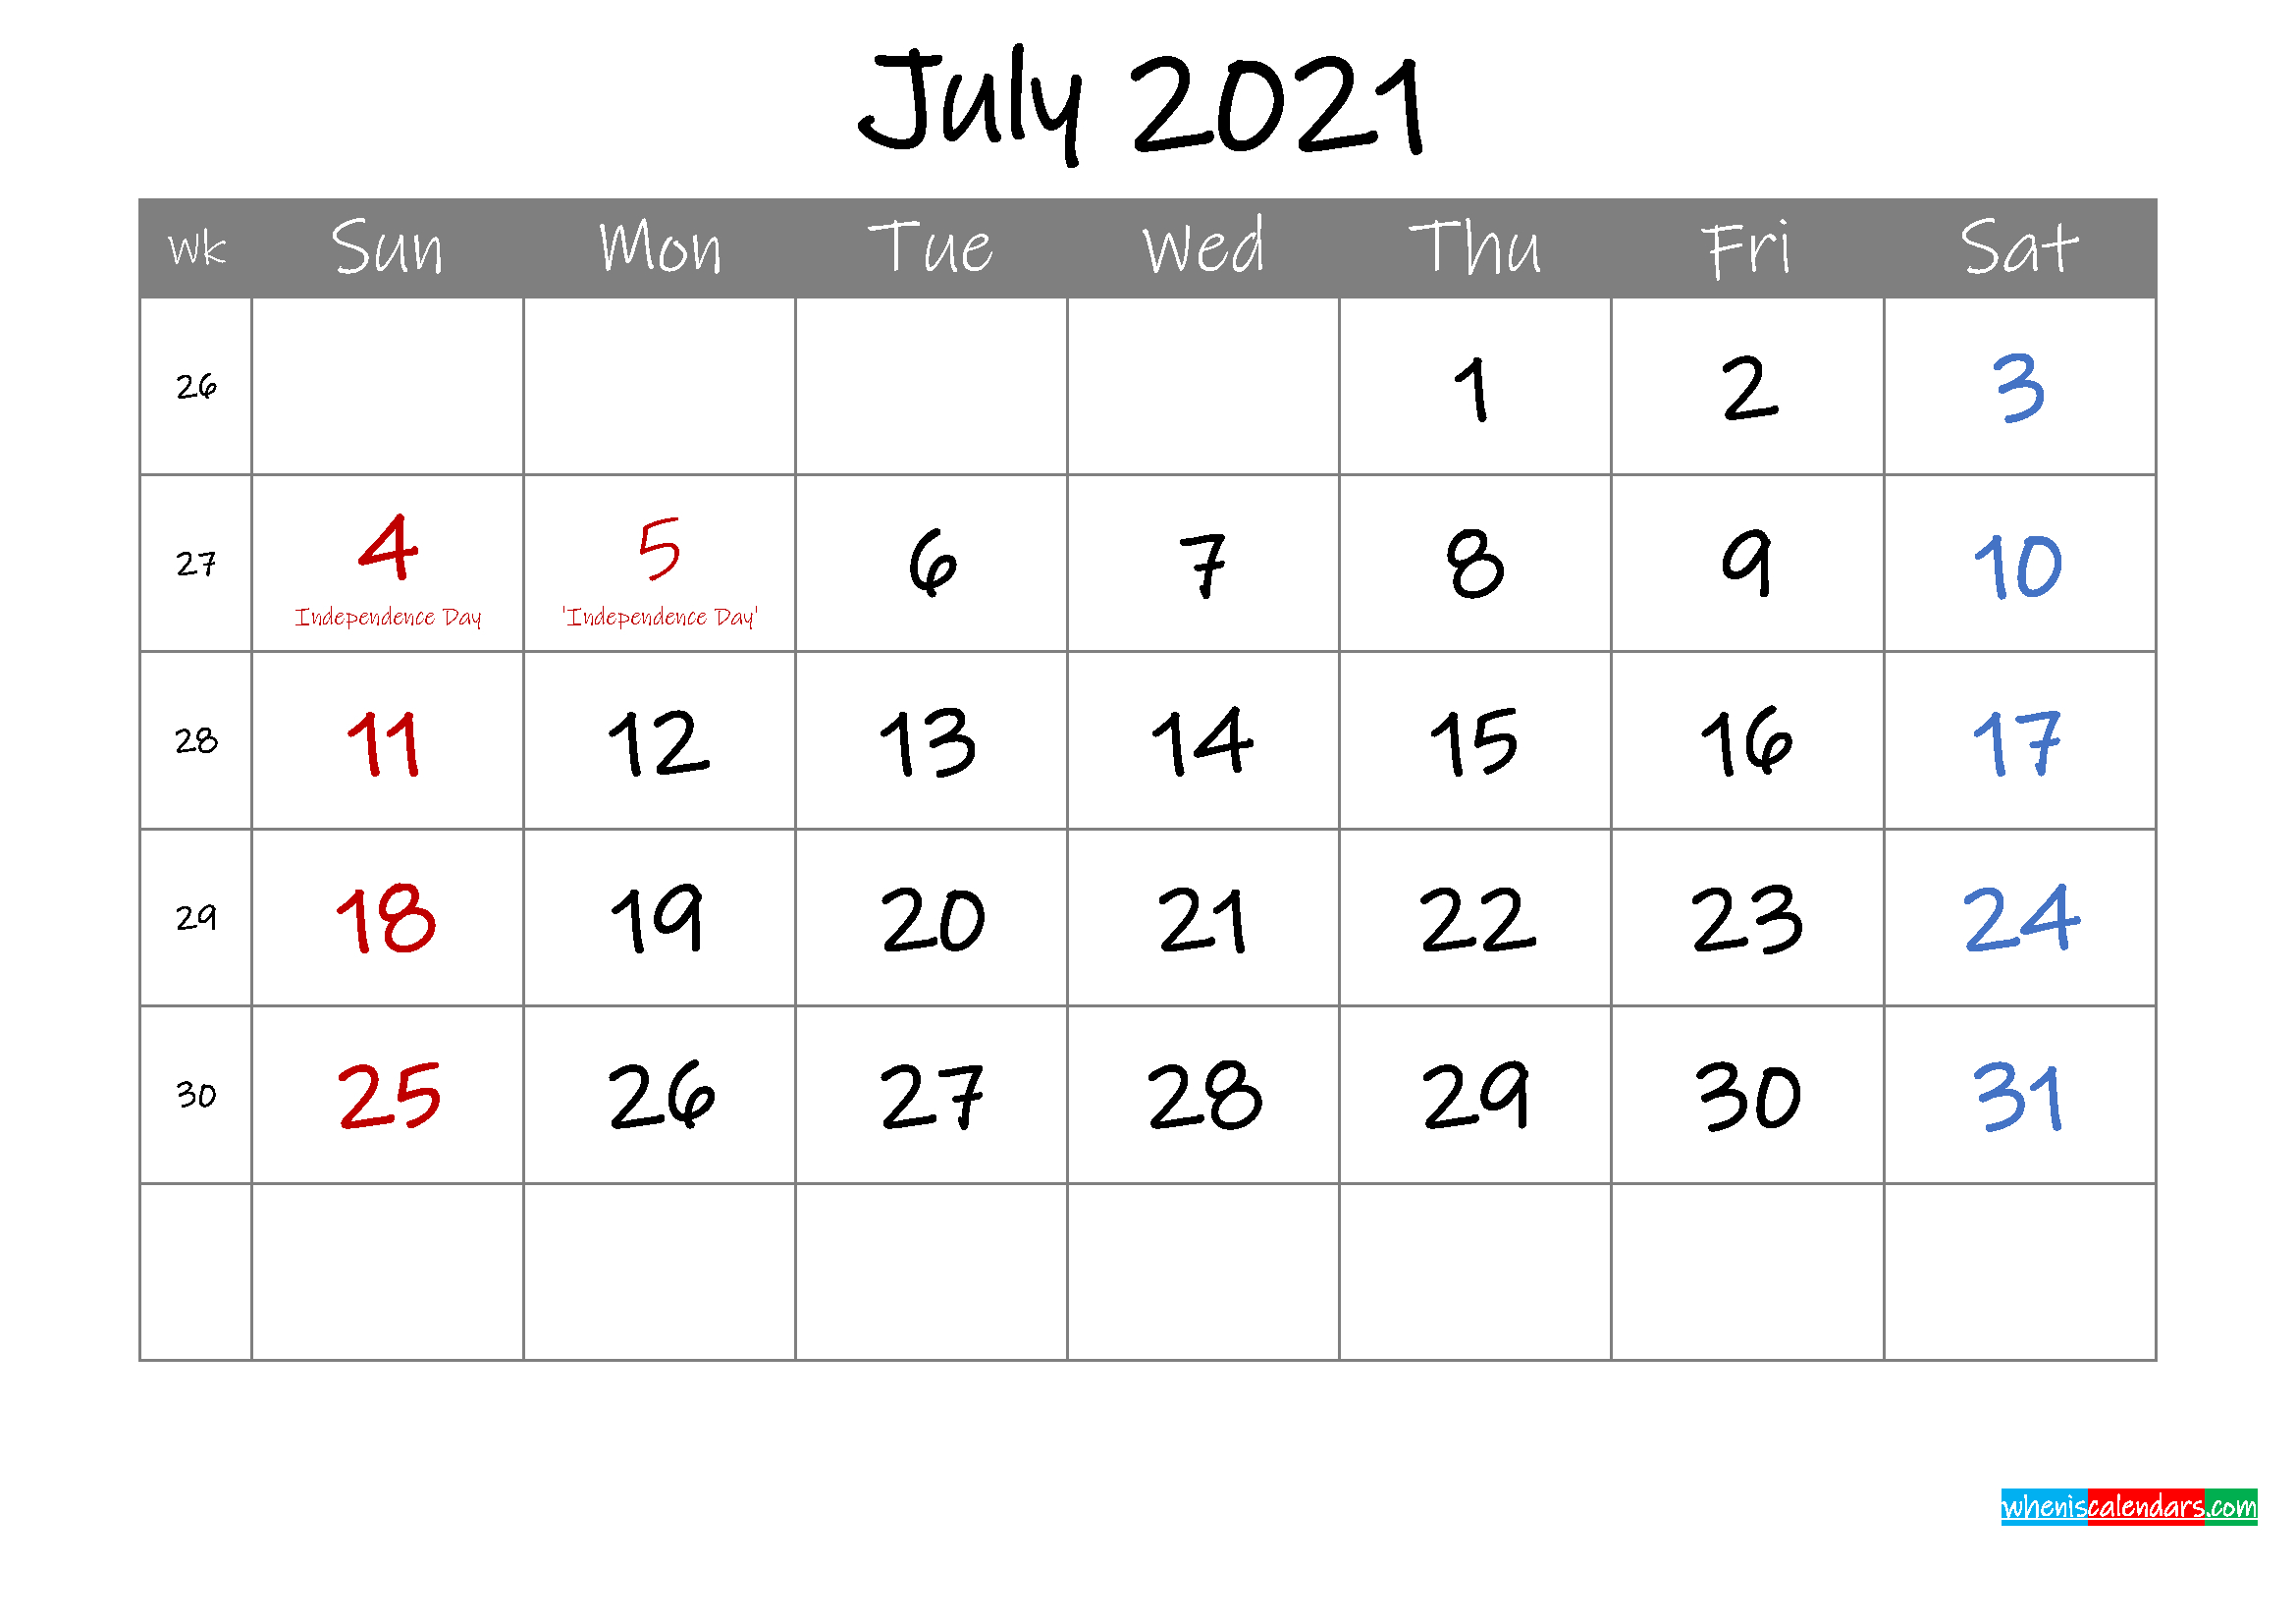 starfall calendar july